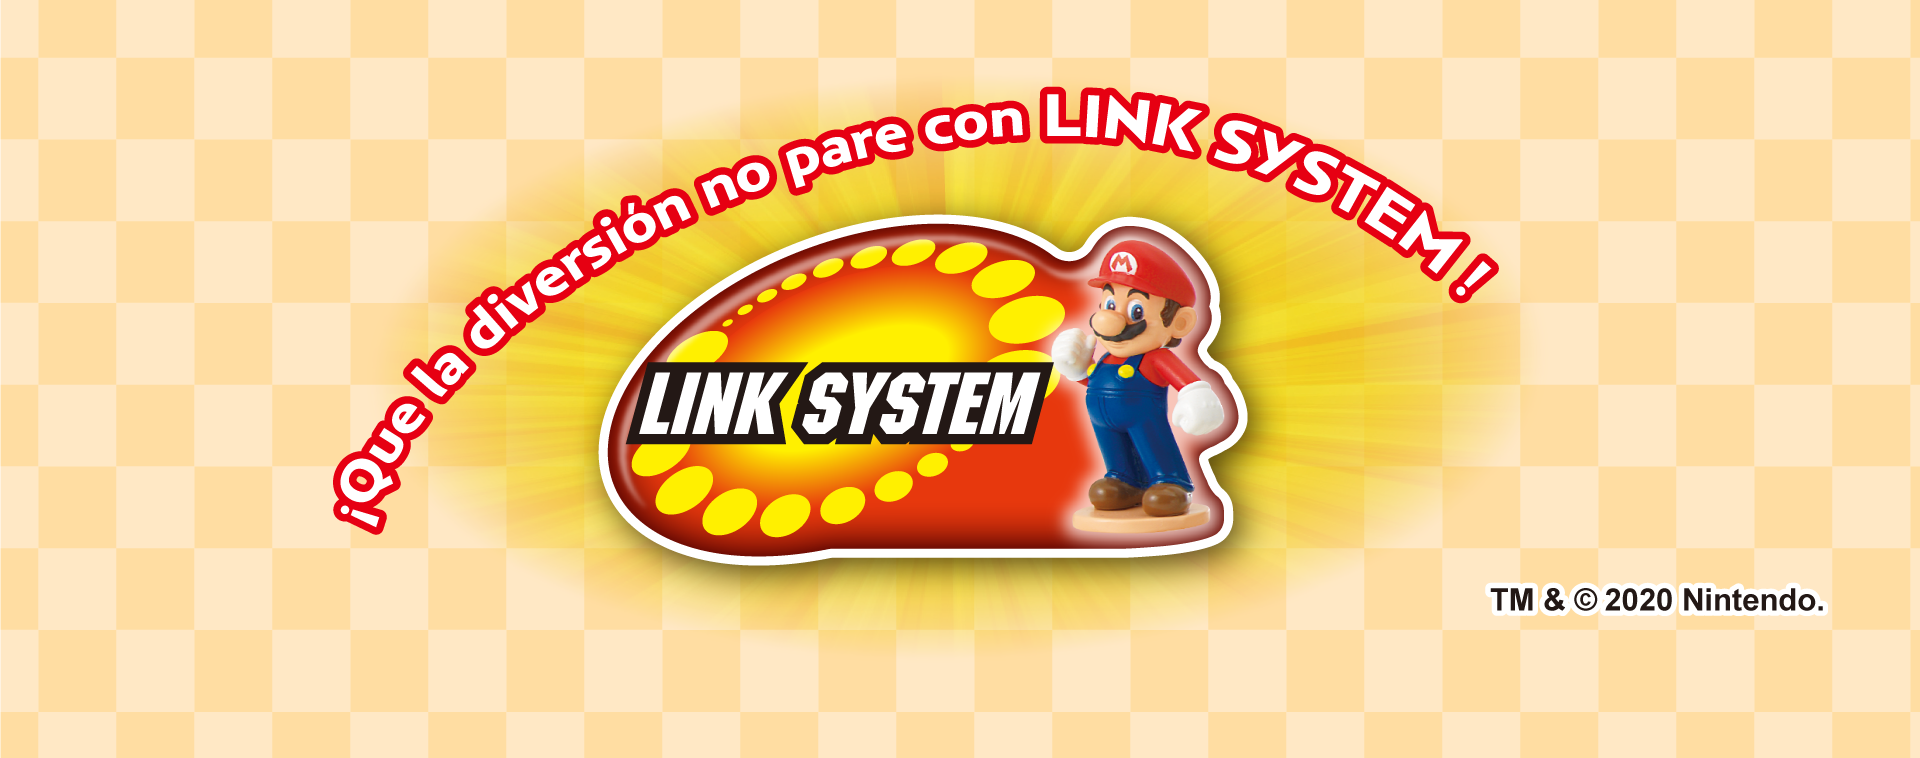 Super Mario™ LINK SYSTEM
